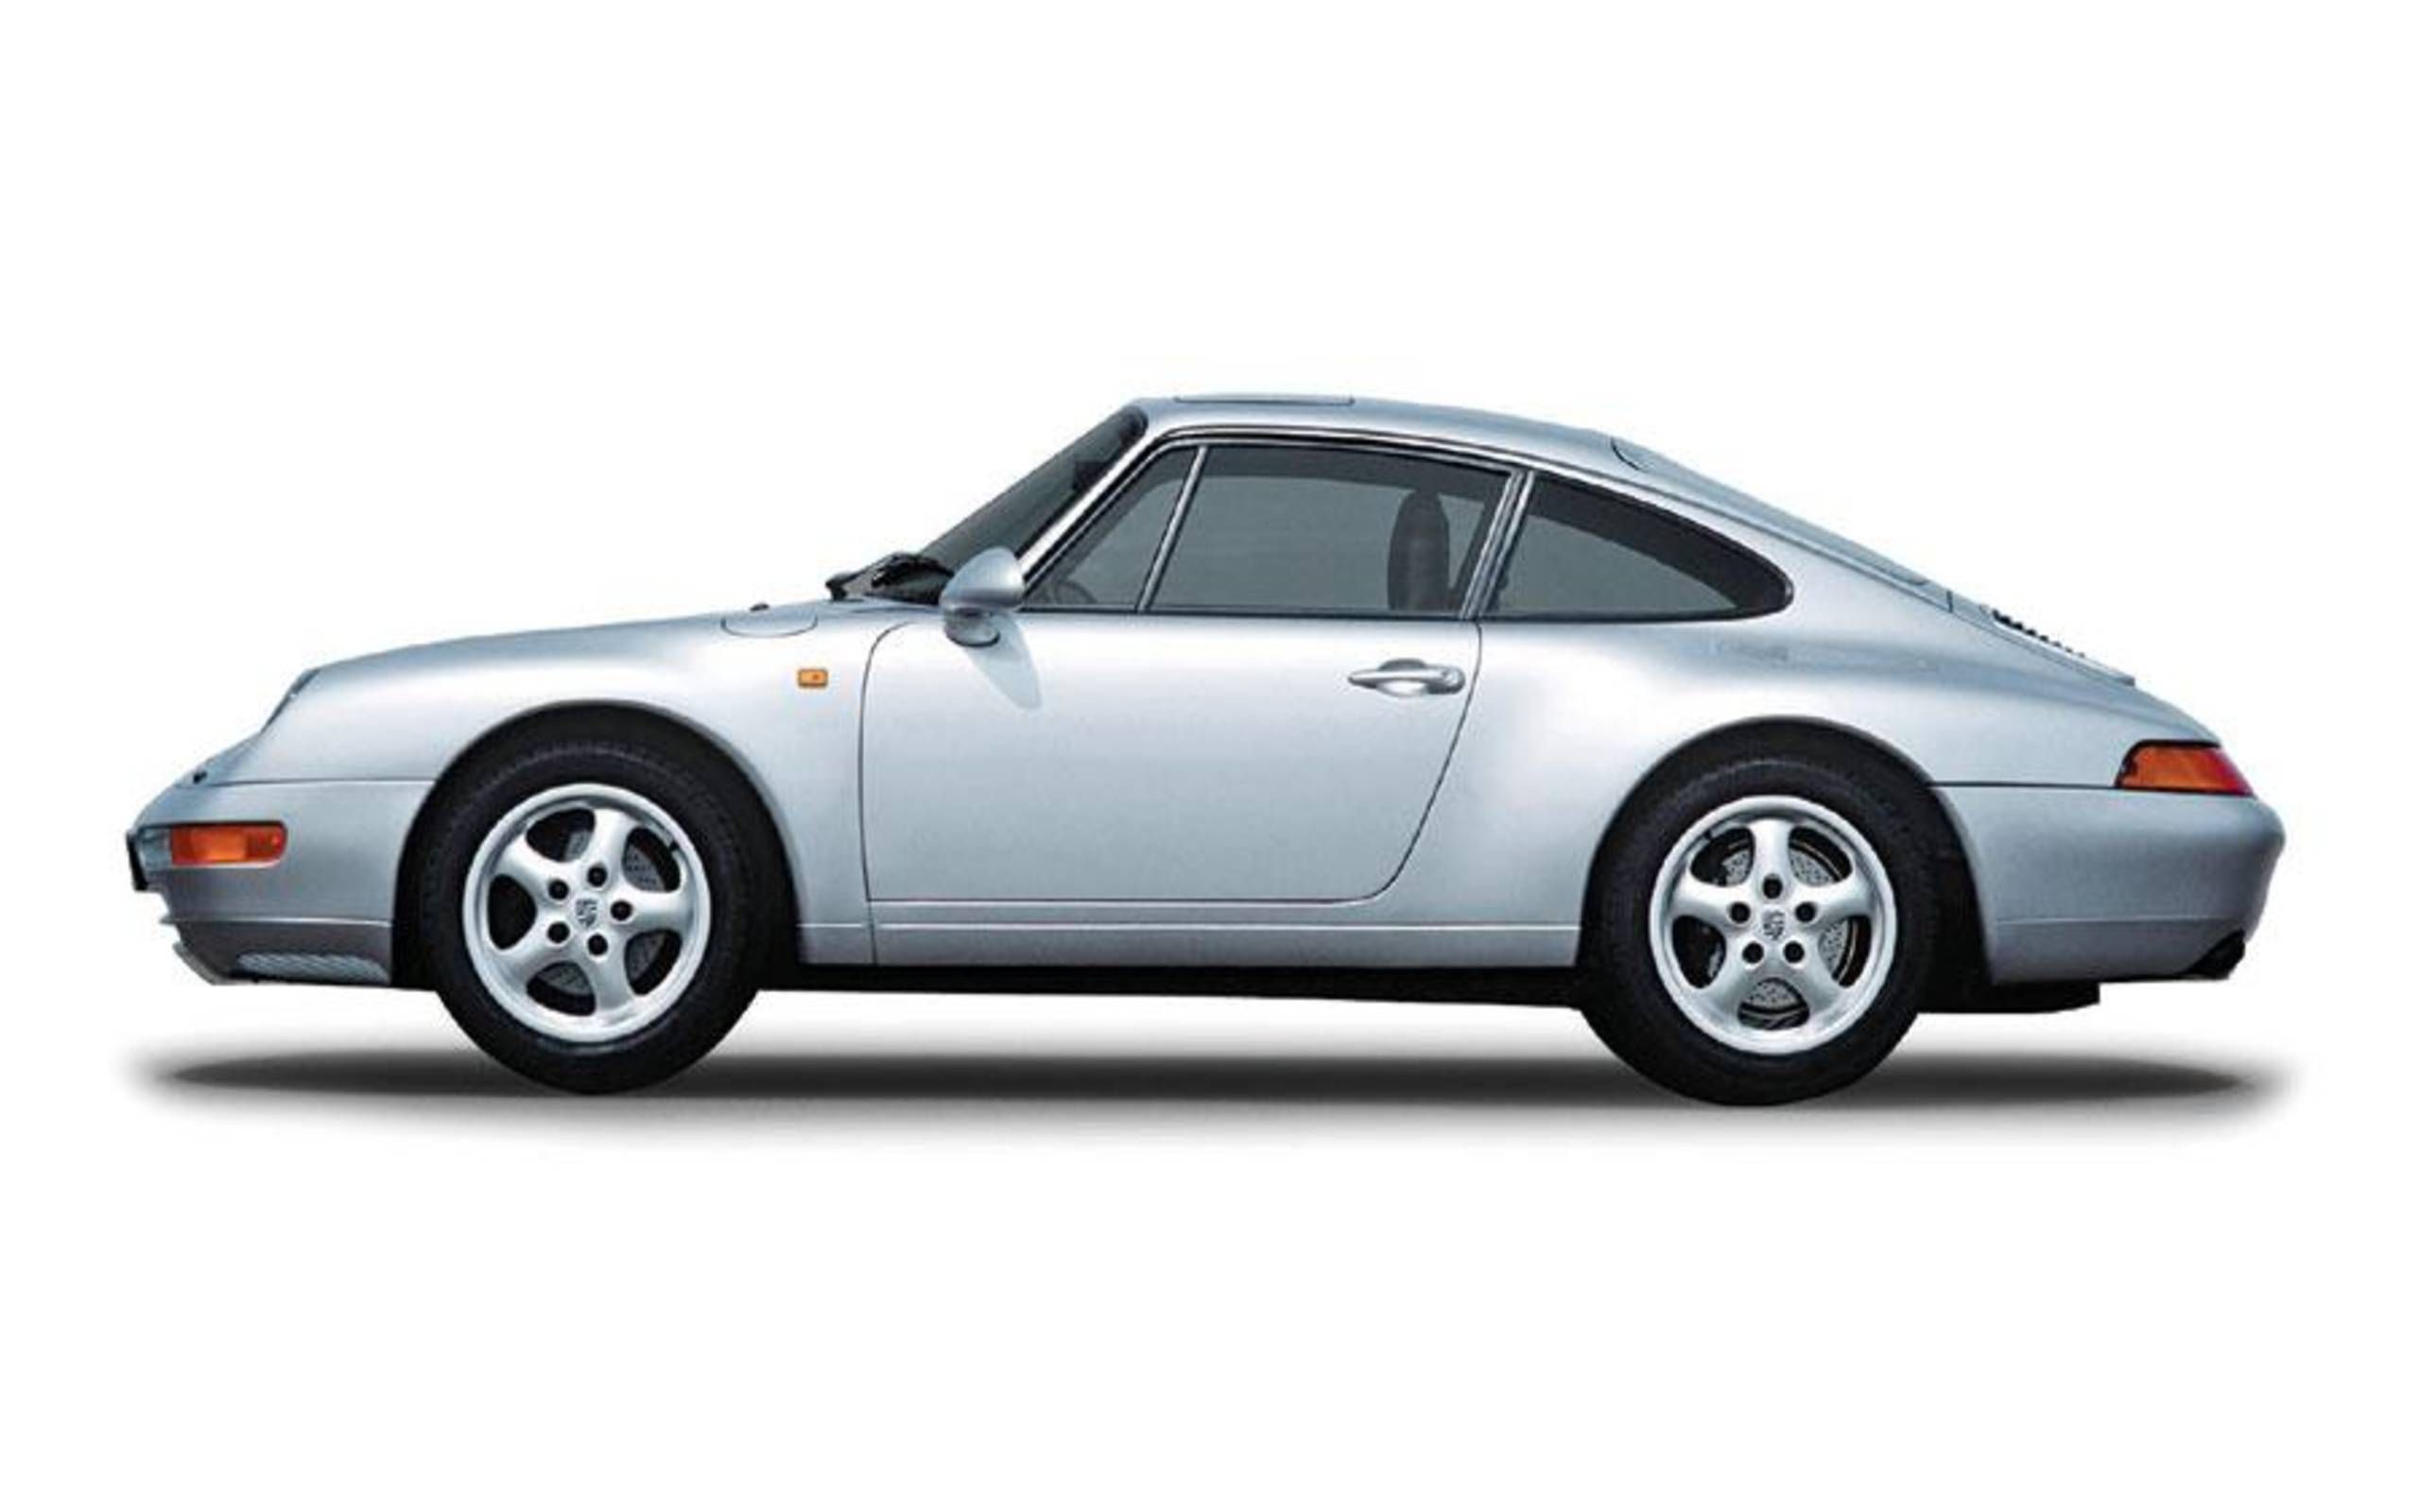 History of the Porsche 911